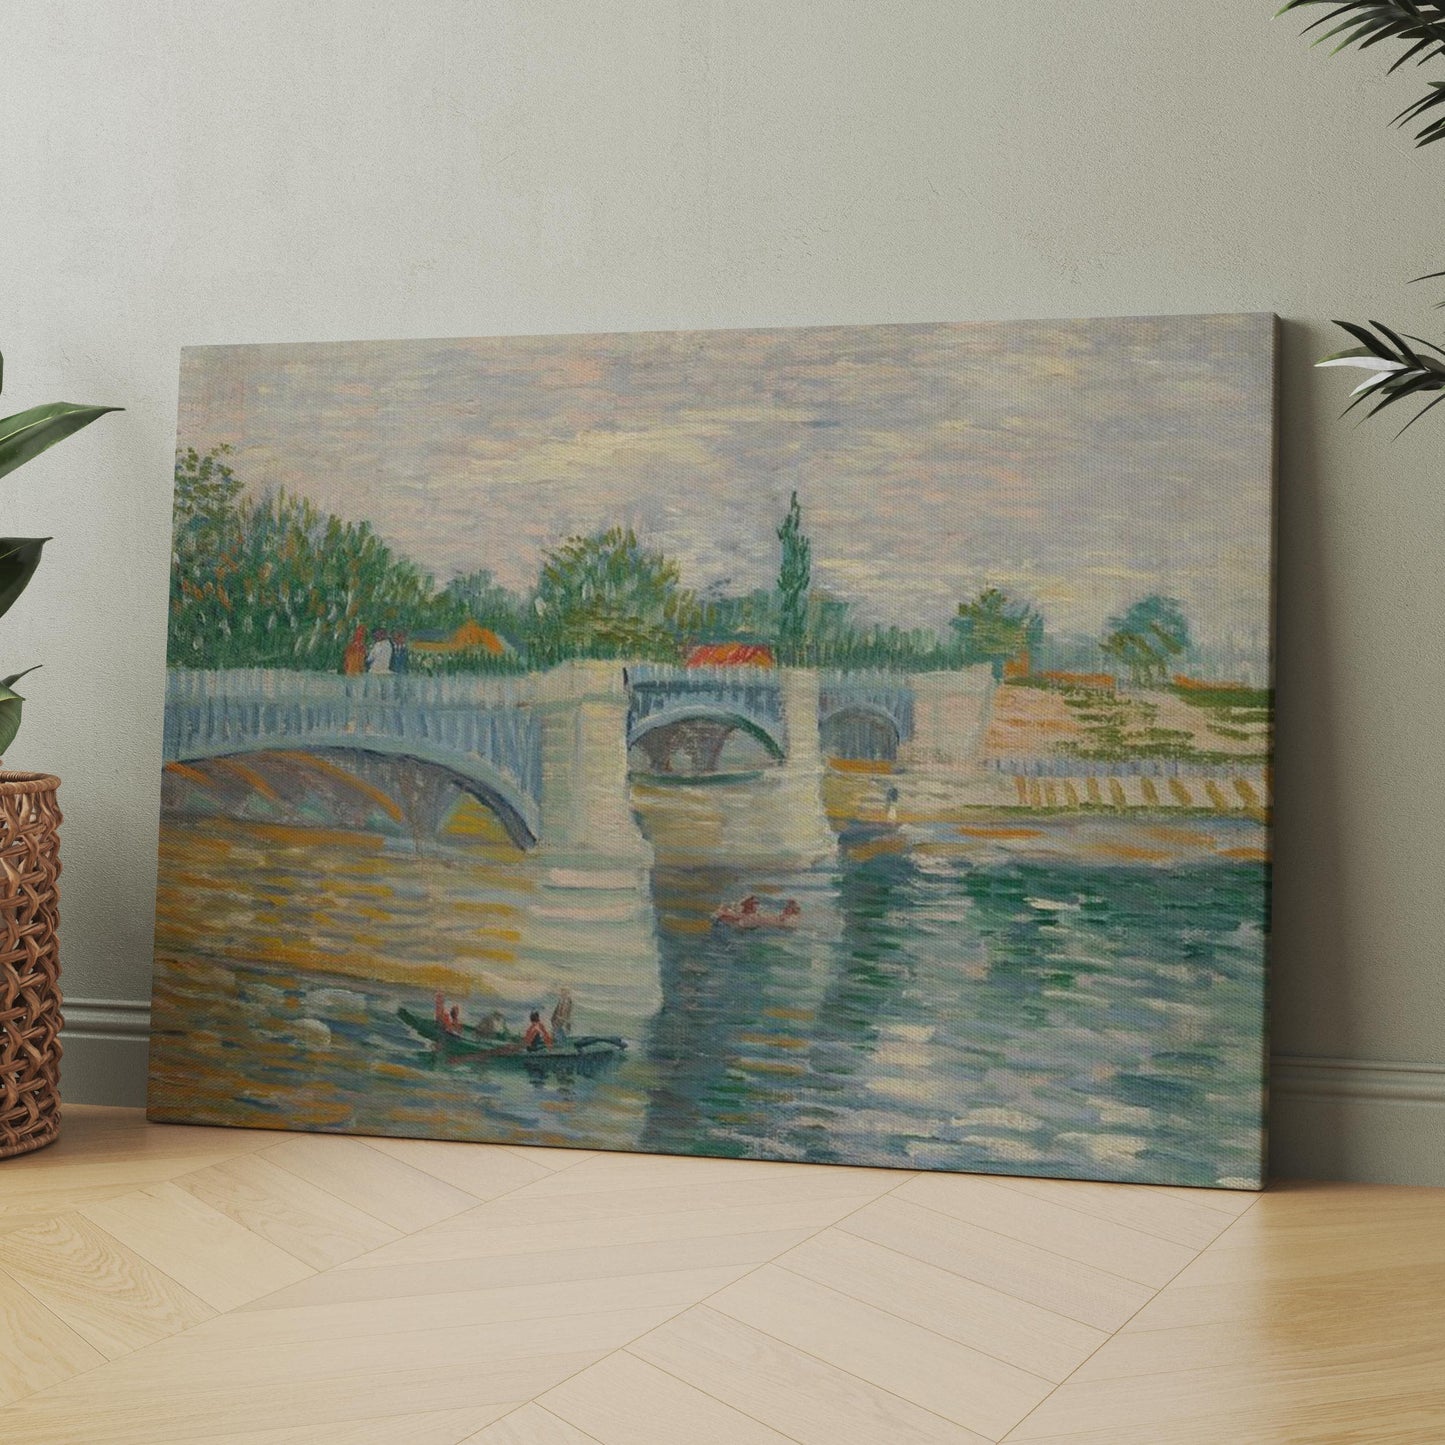 The Bridge at Courbevoie (1887) by Van Gogh